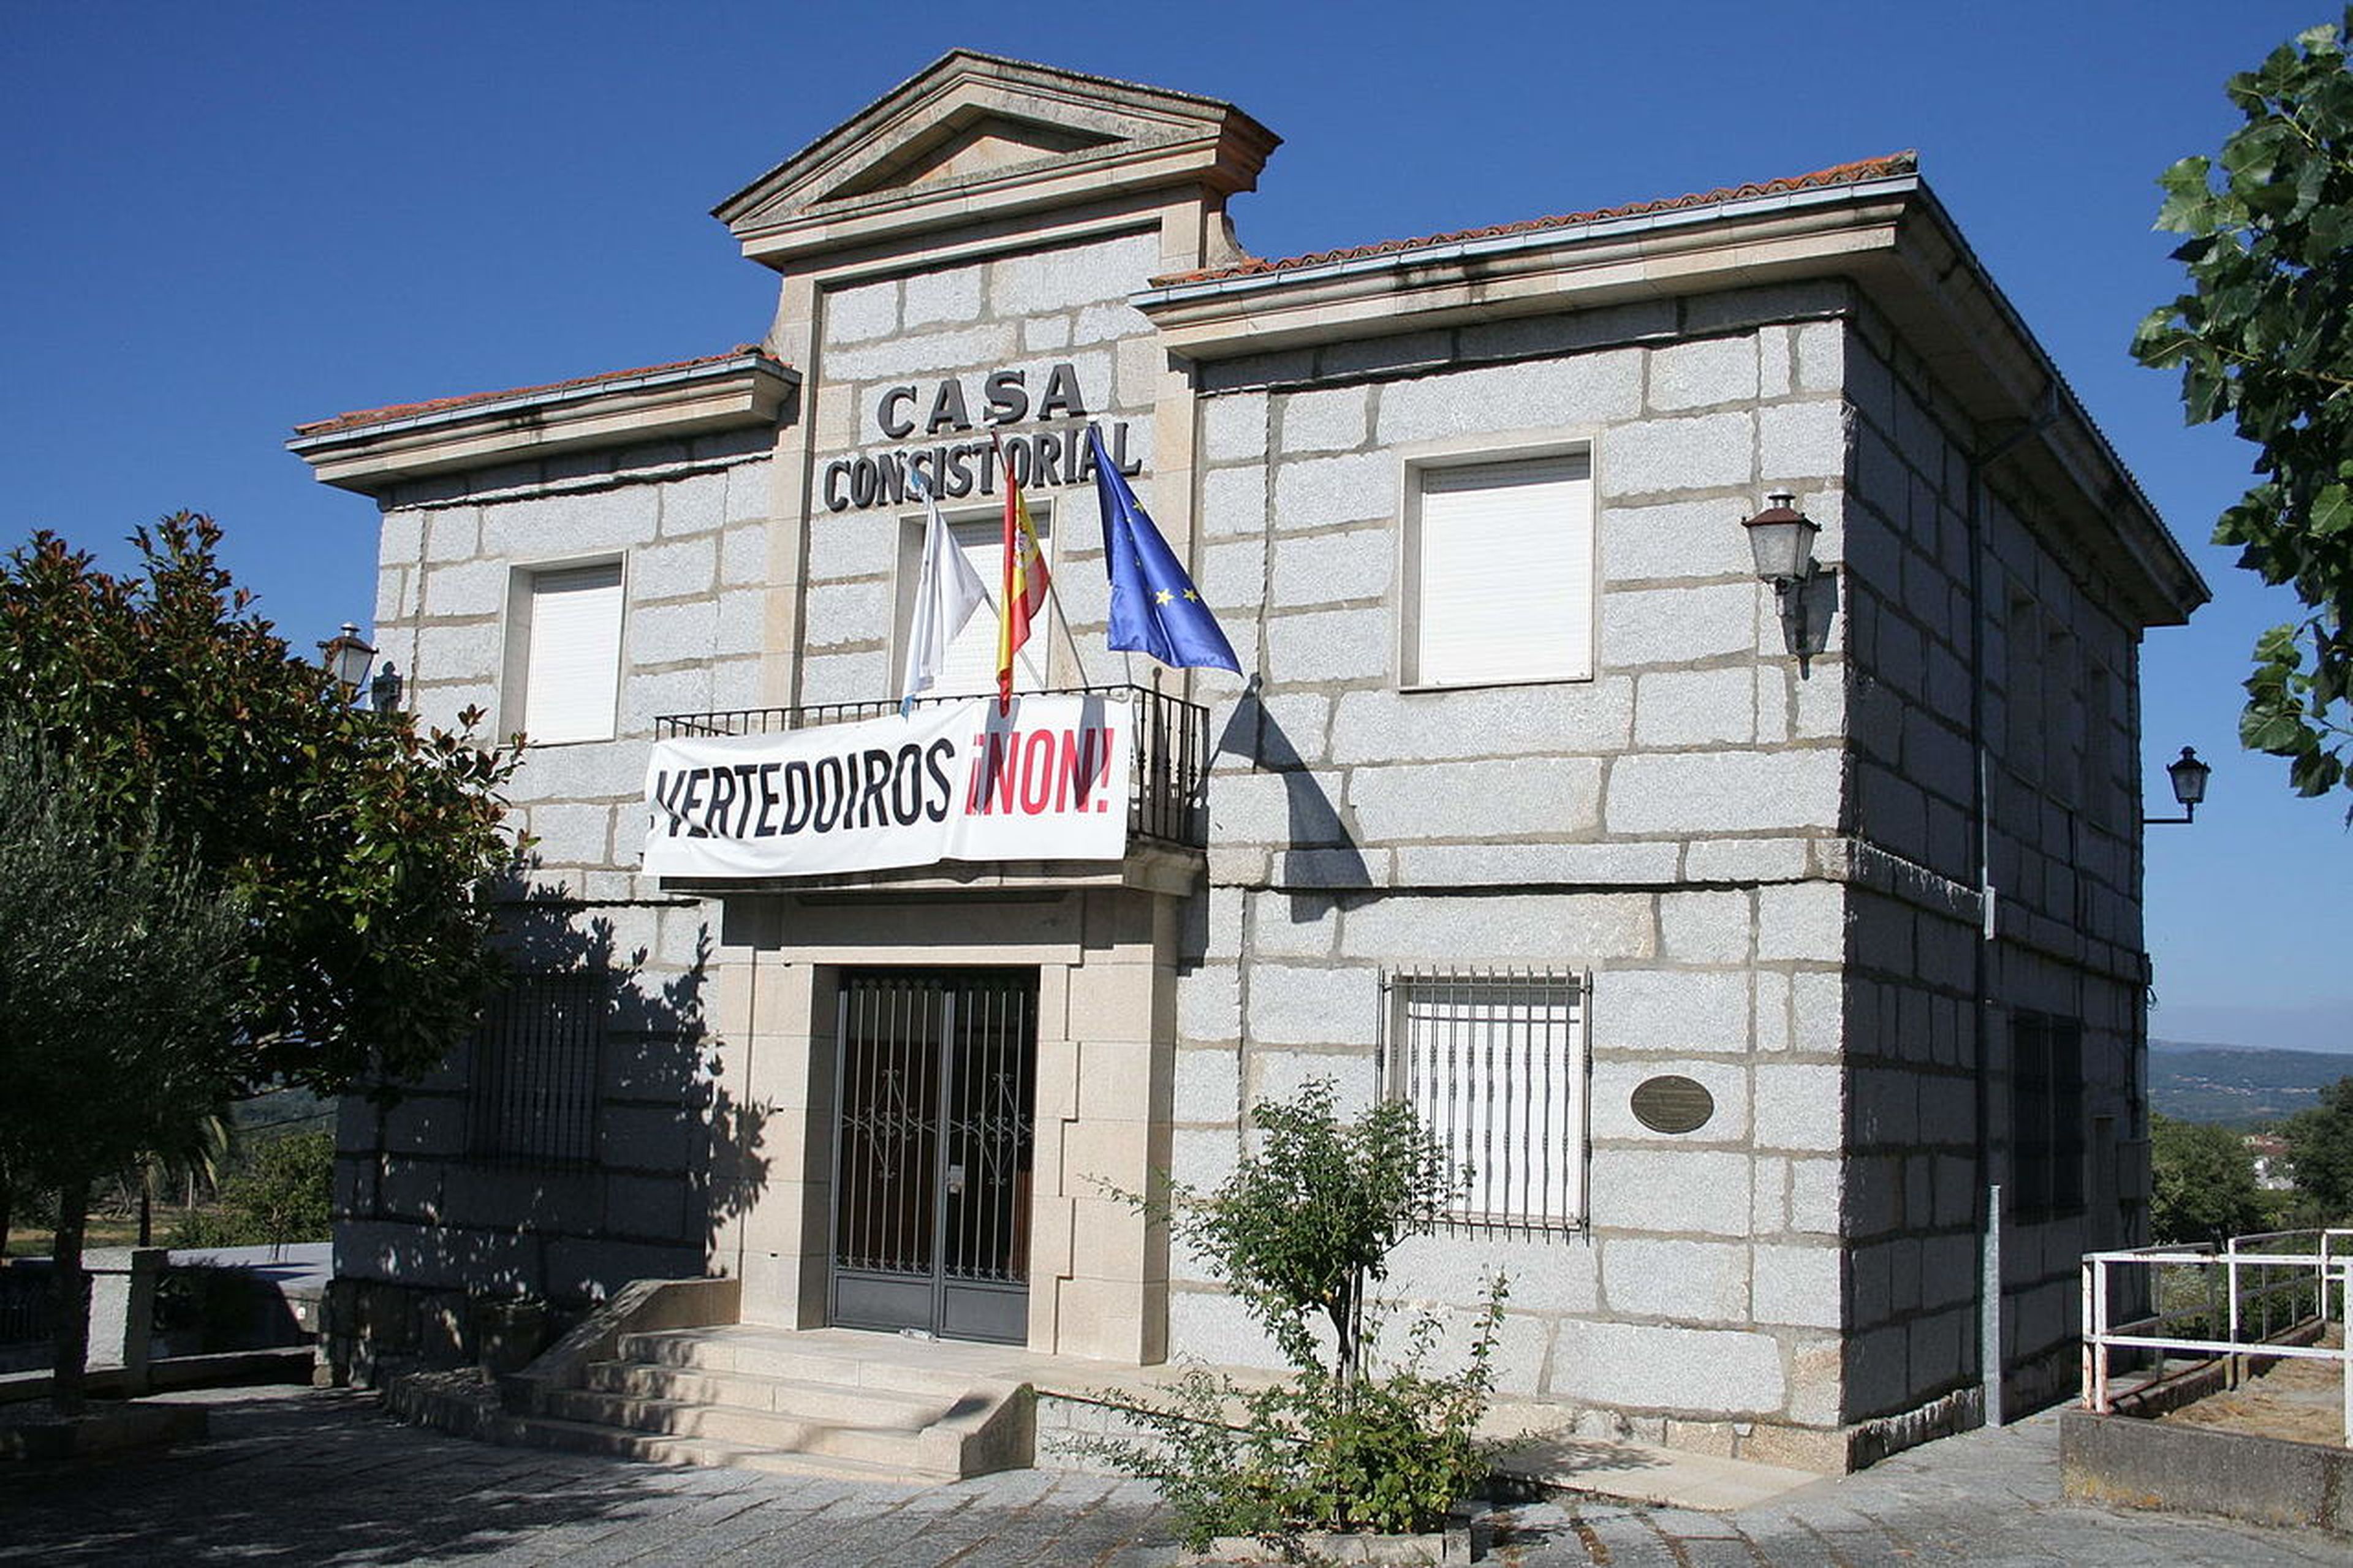 Taboadela (Ourense)